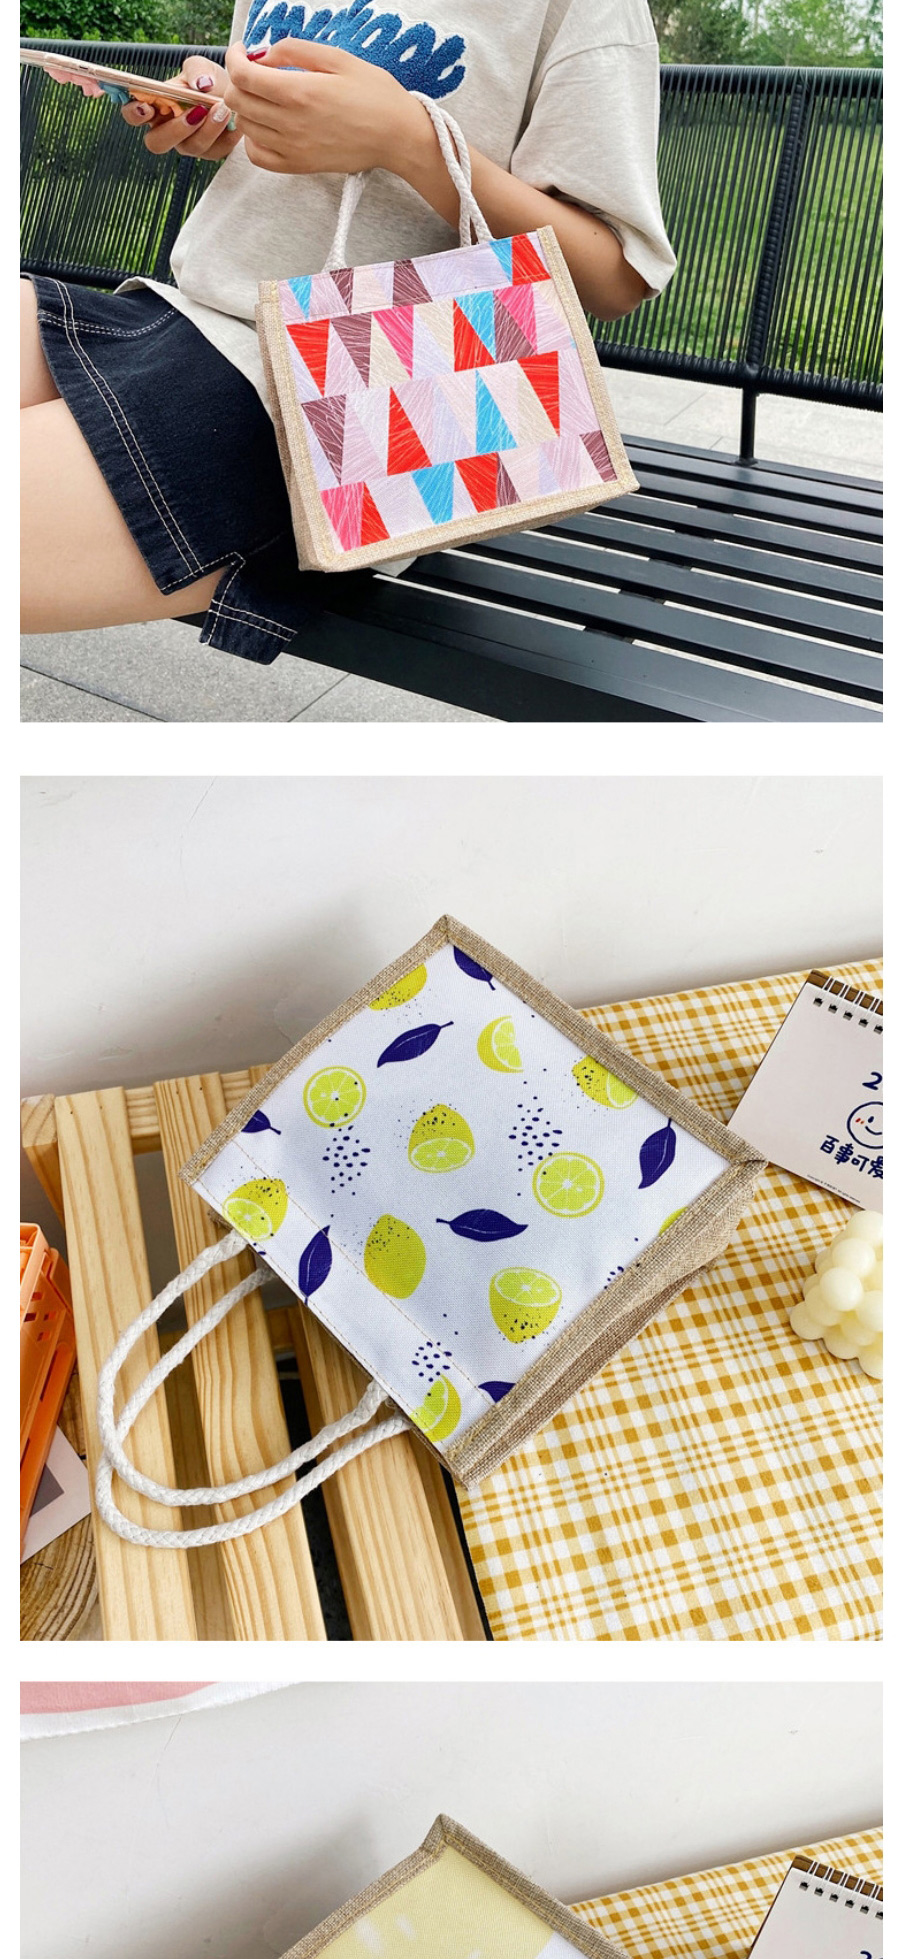 Fashion Color 1 Cotton And Linen Printed Canvas Handbag,Handbags